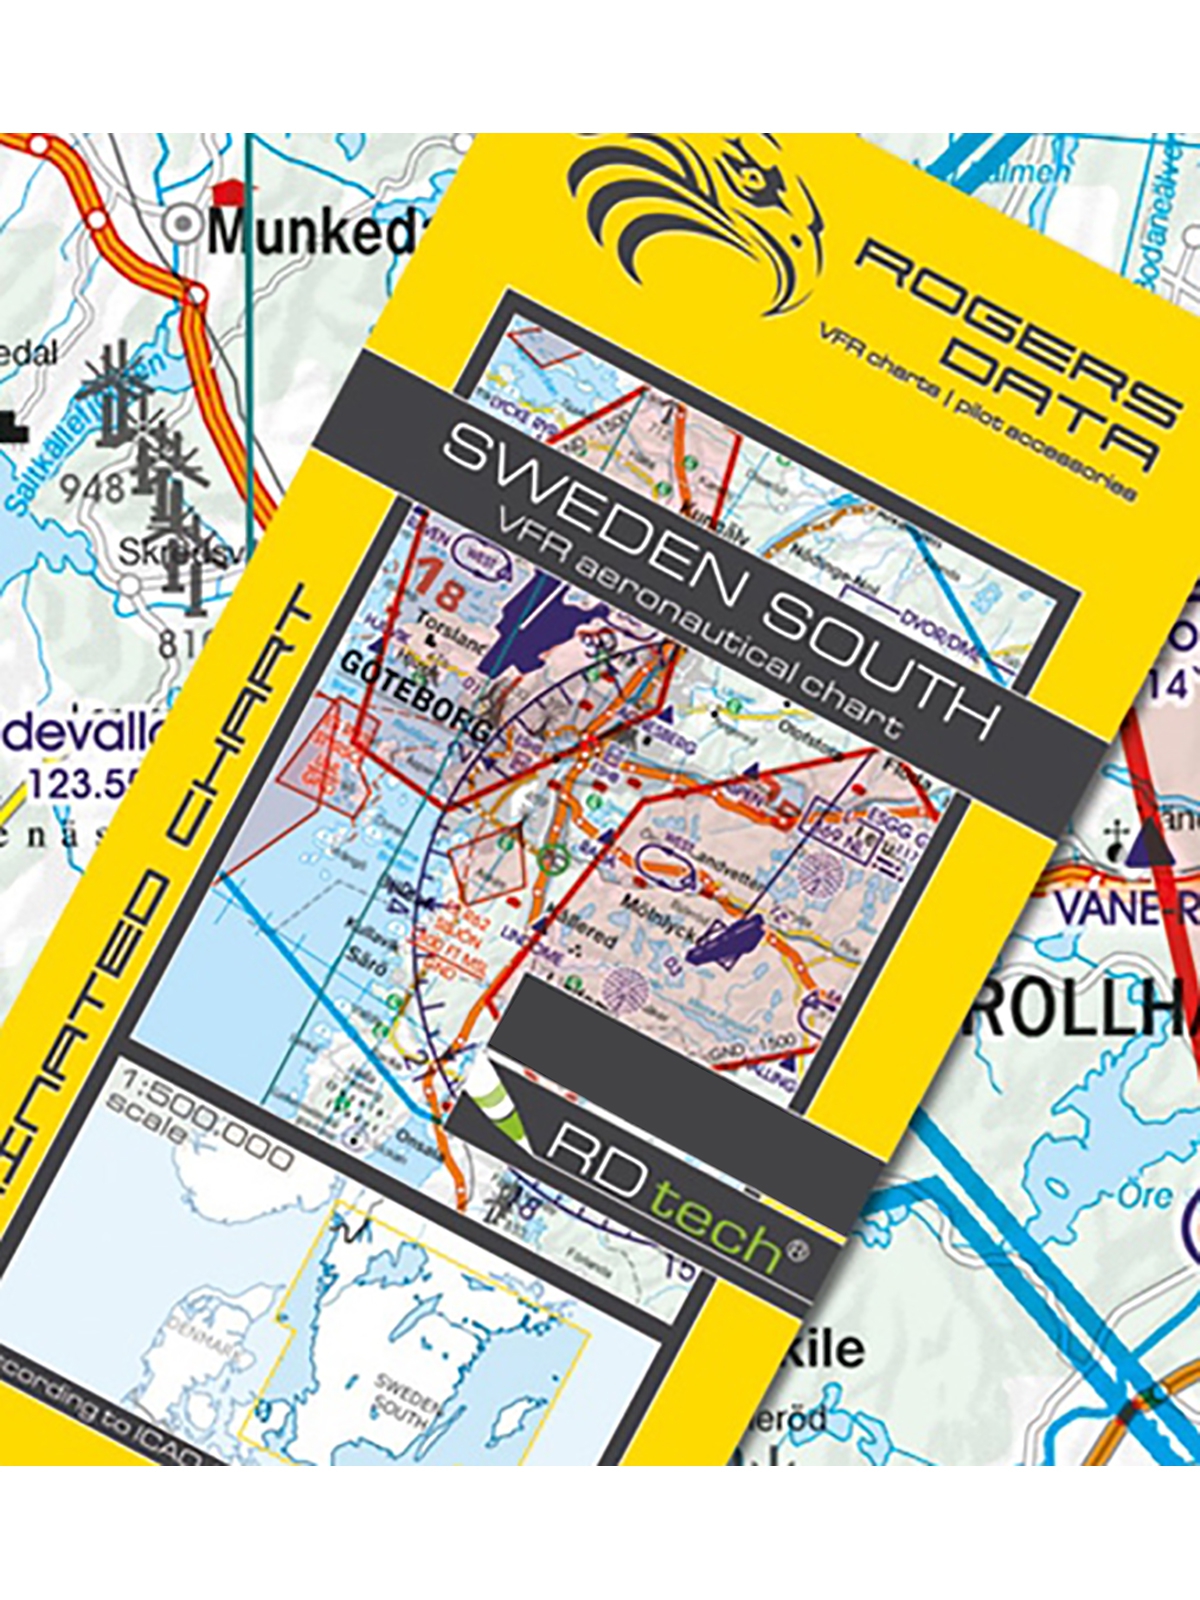 Sweden South - Rogers Data VFR Chart, 1:500,000, laminated, folded